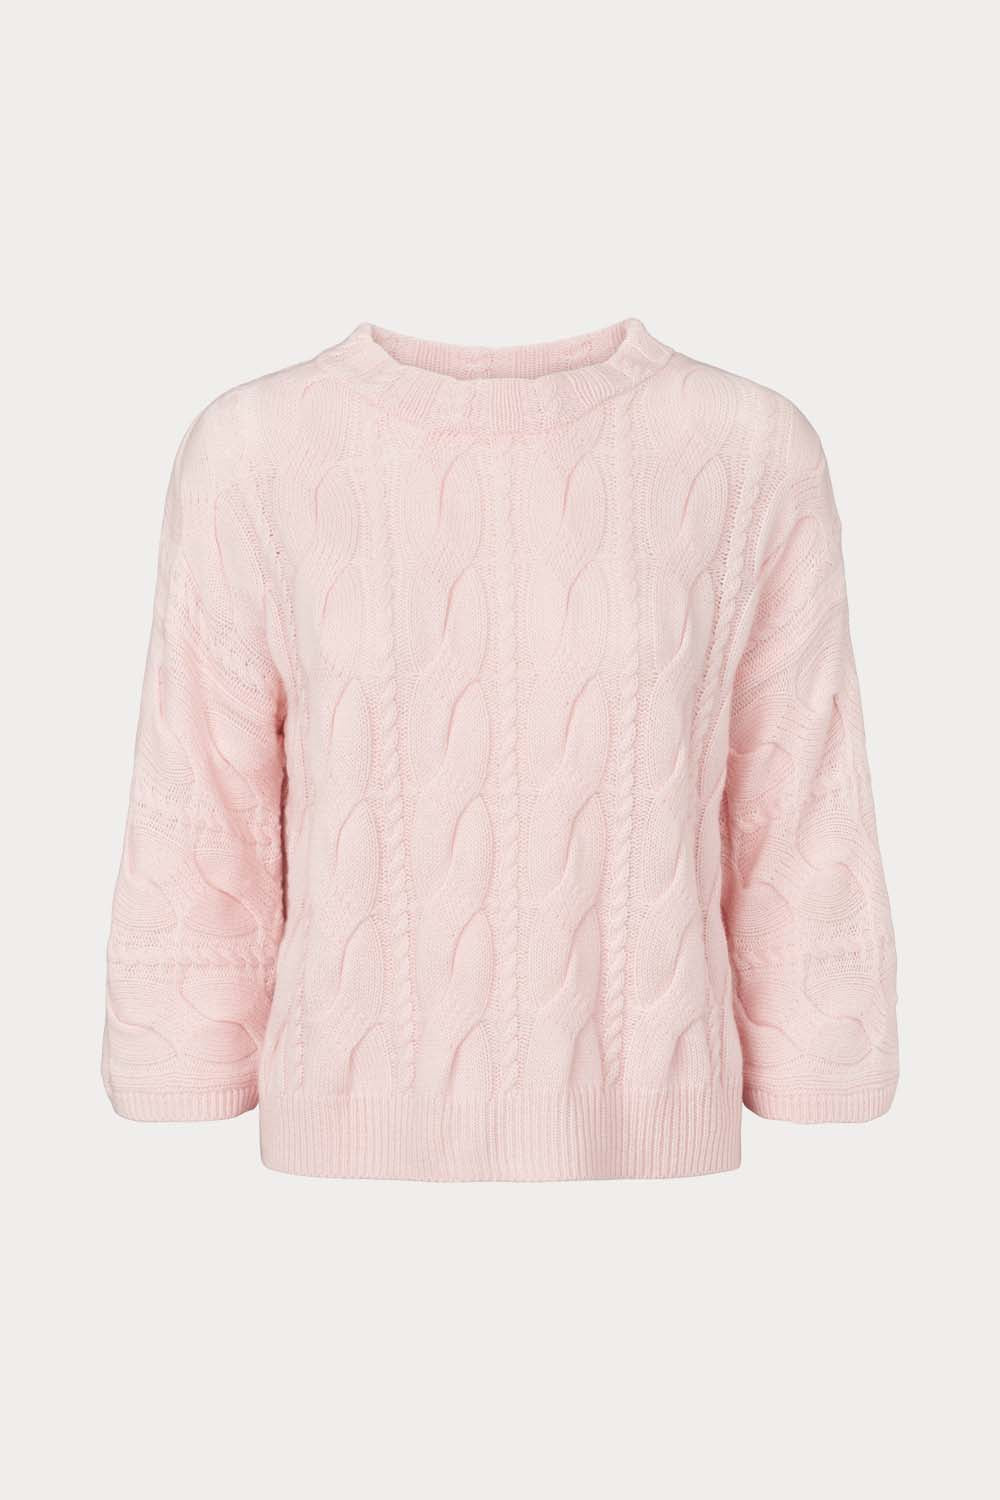 O'TAY Ballie Sweater Bluser Pastel Pink